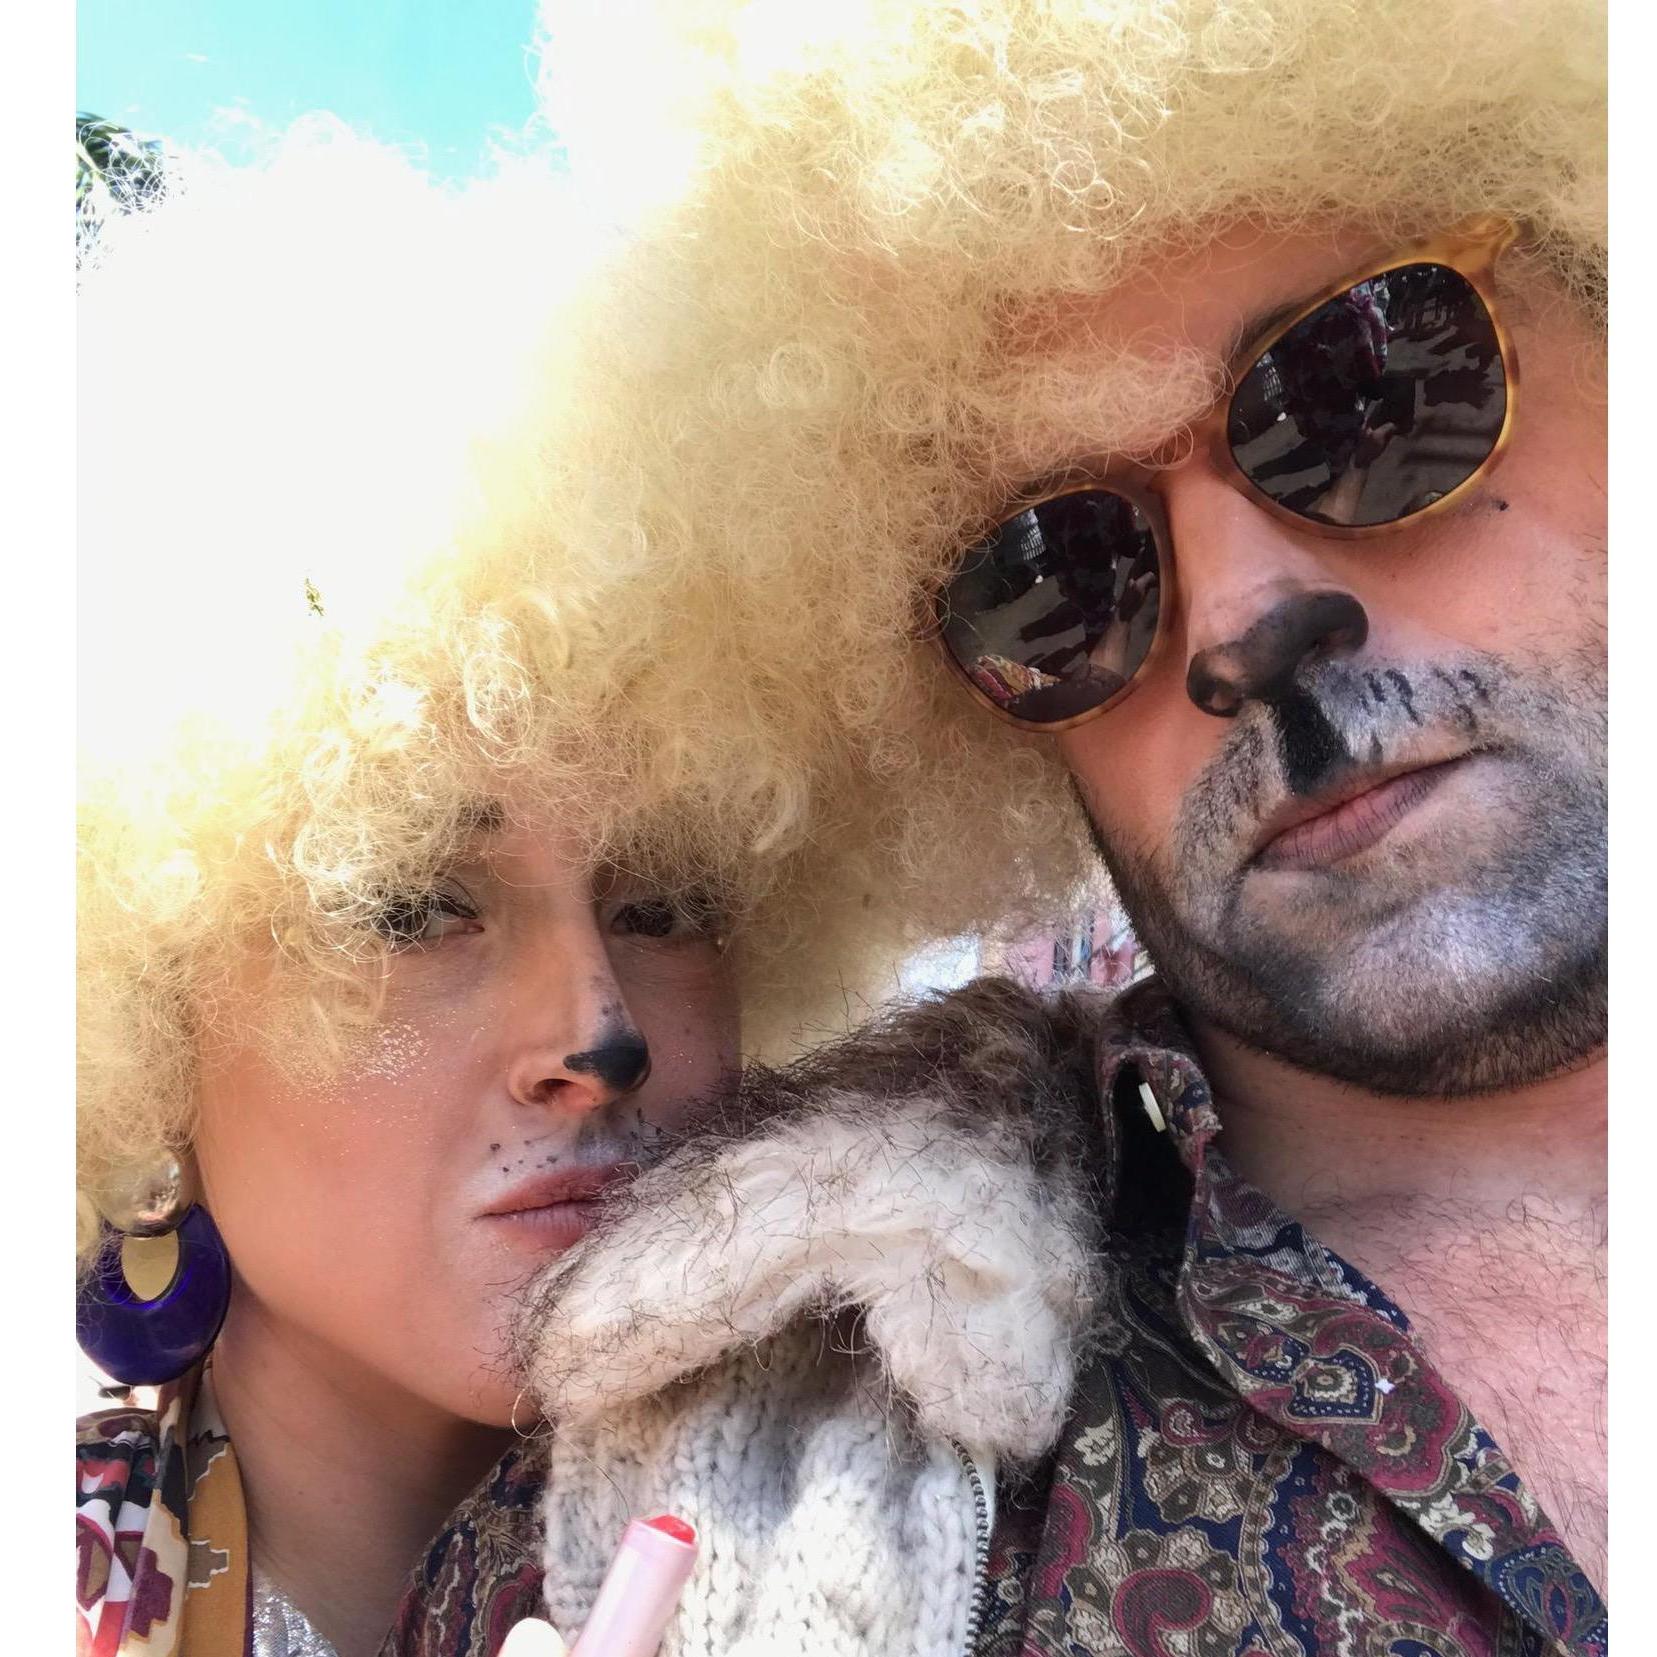 NOLA, Mardi Gras 2019- dressed as Disco Lions on Mardi Gras morning